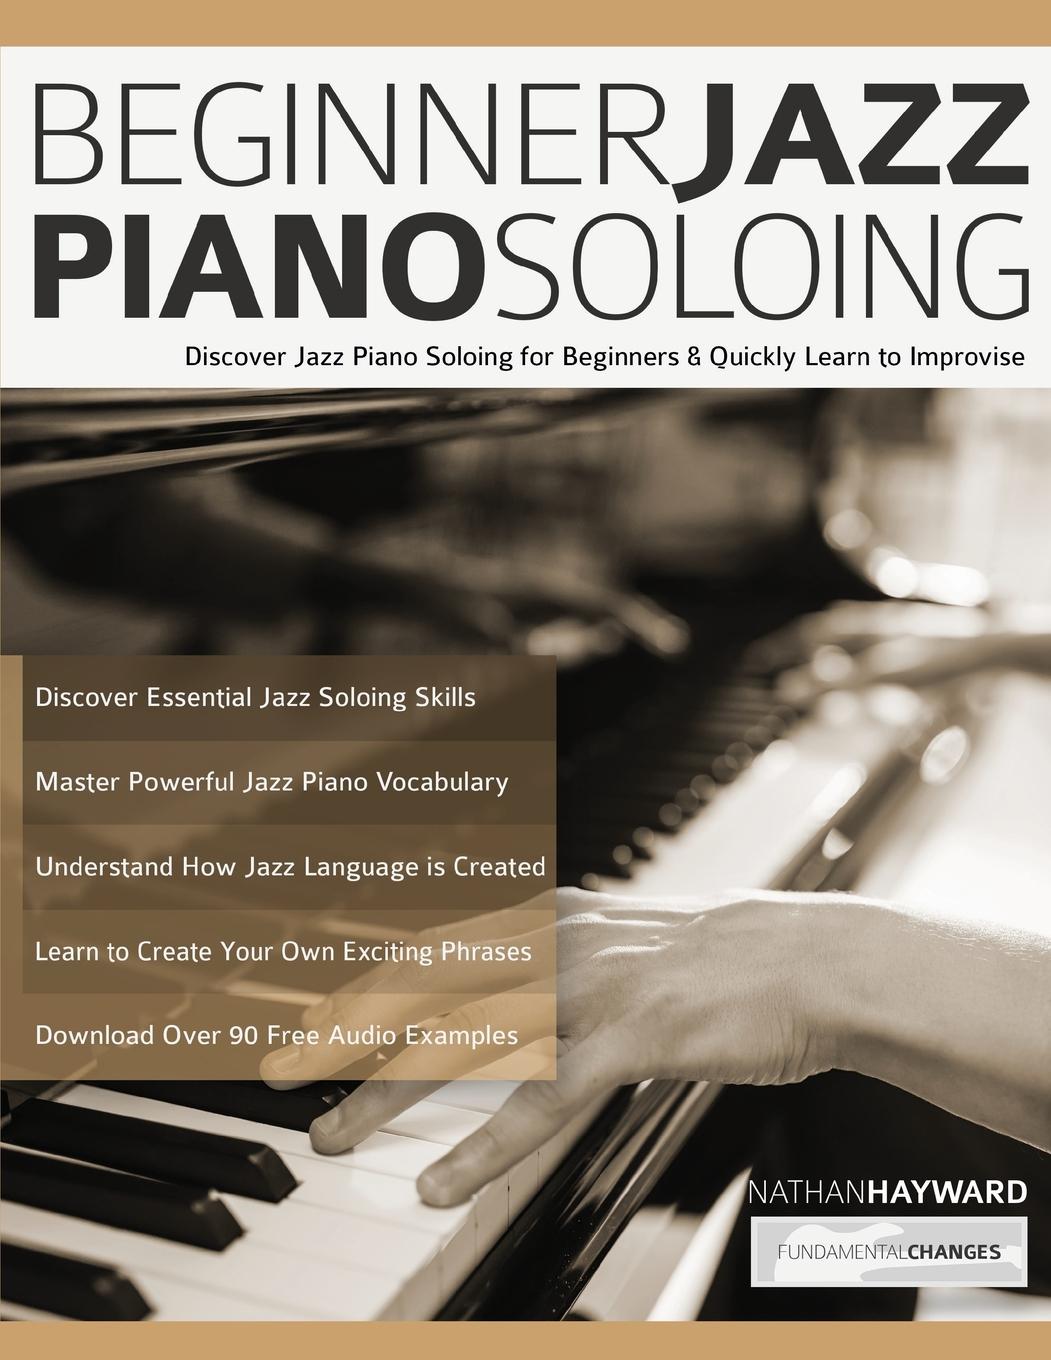 Book Beginner Jazz Piano Soloing Joseph Alexander